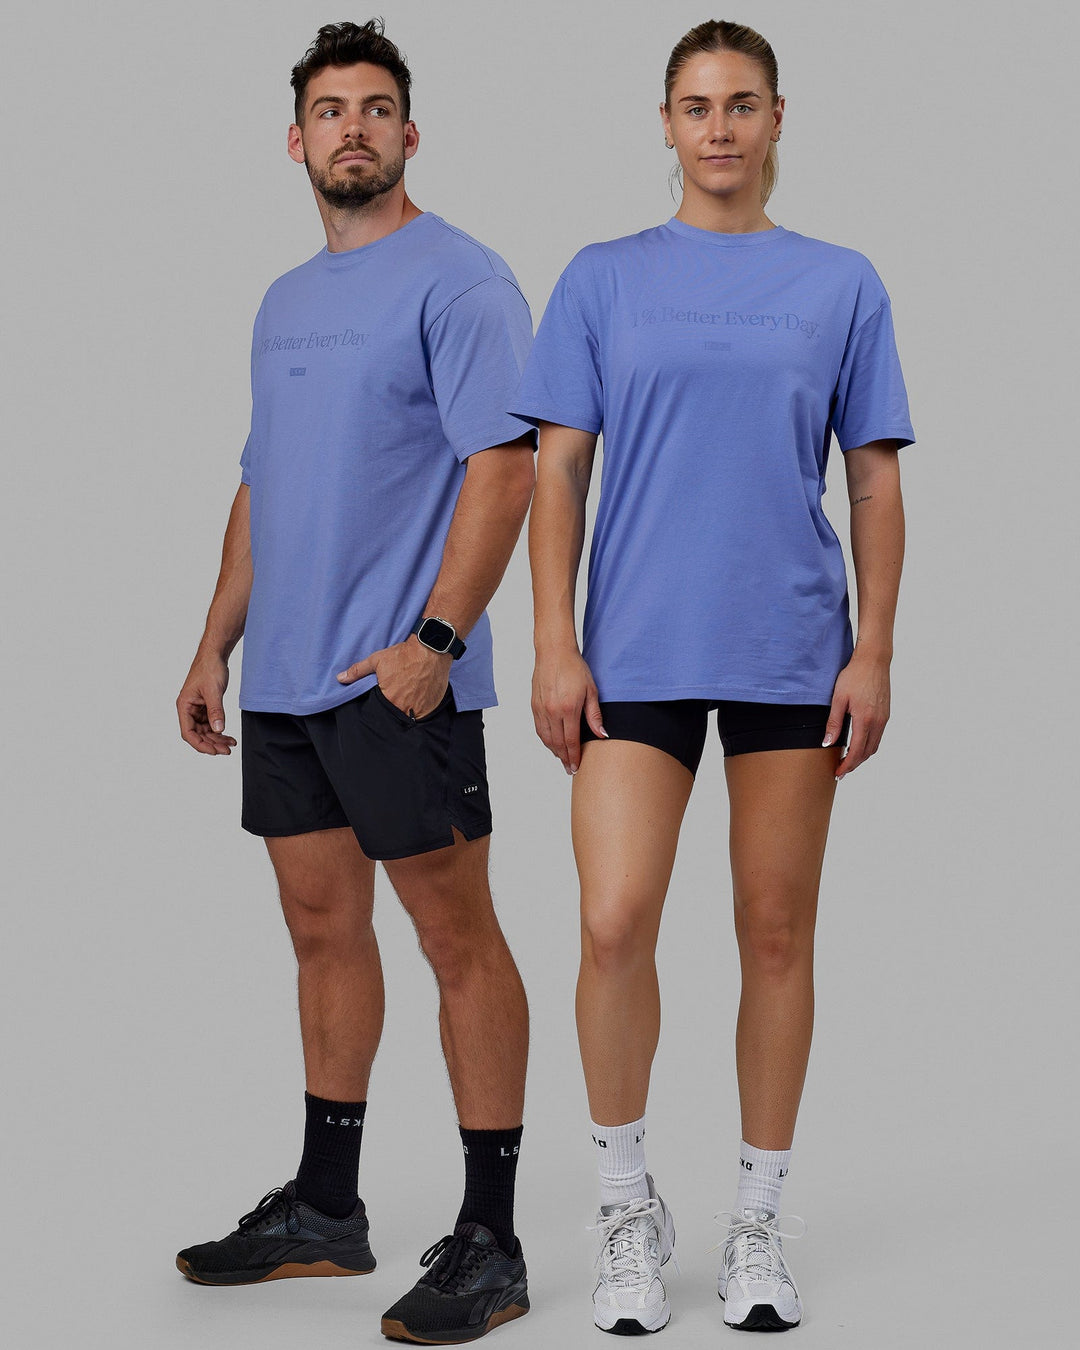 Duo wearing Unisex 1% Better FLXCotton Tee Oversize - Cornflower Blue